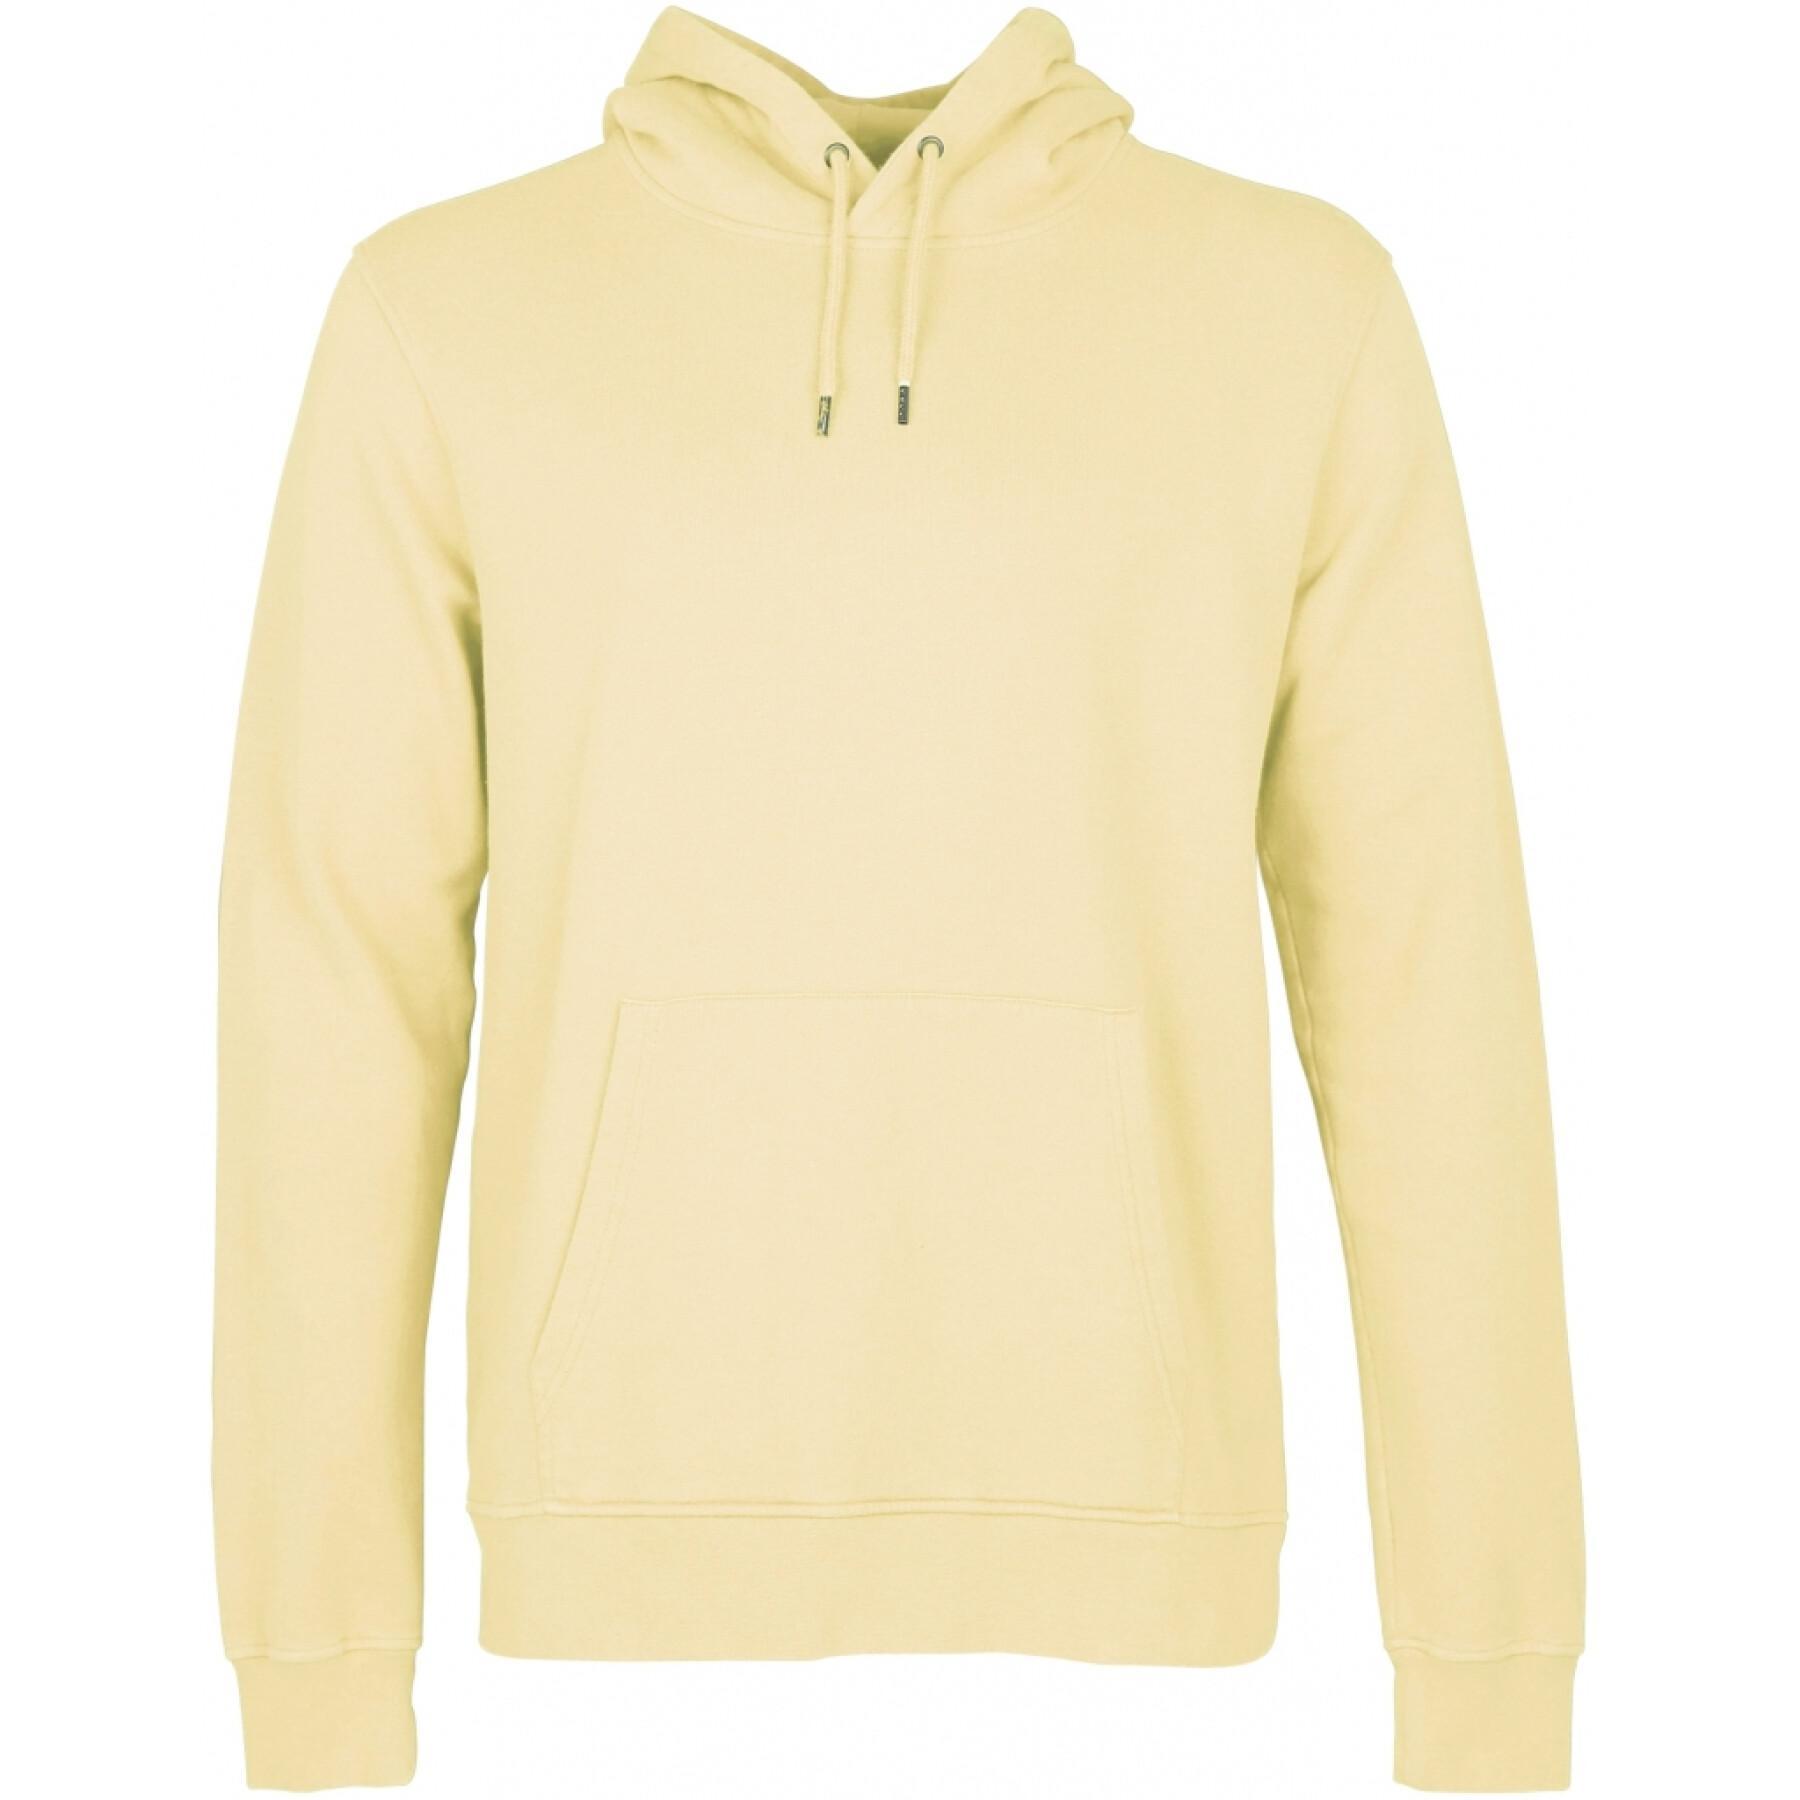 Sweatshirt med huva Colorful Standard Classic Organic soft yellow